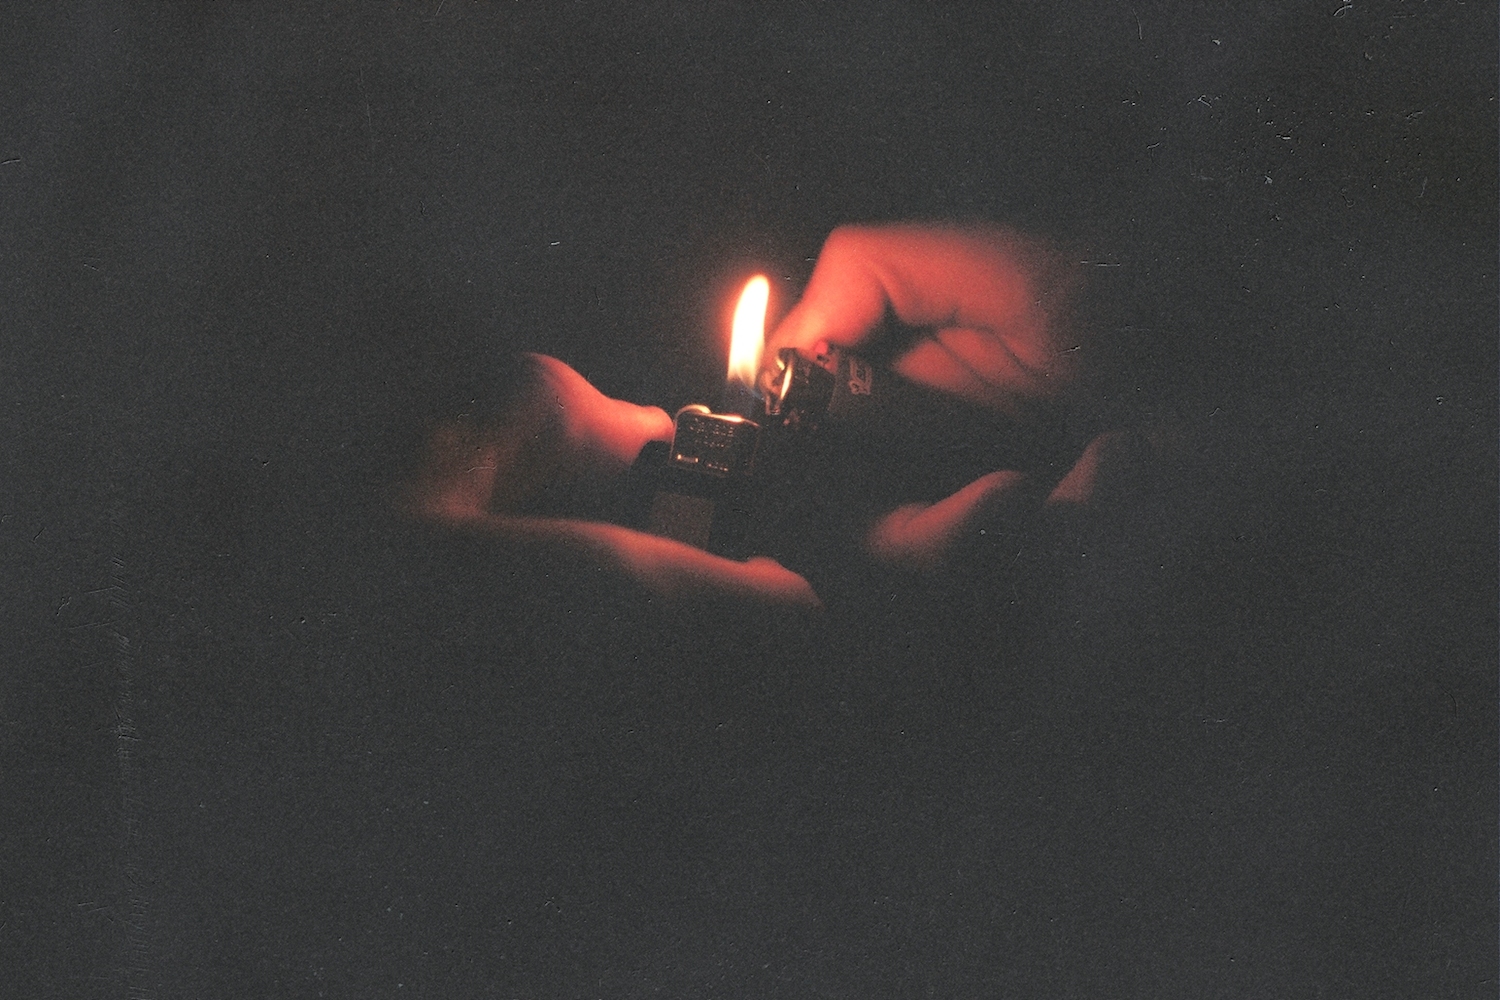 Сигарета В Руке Девушки Ночью Фото